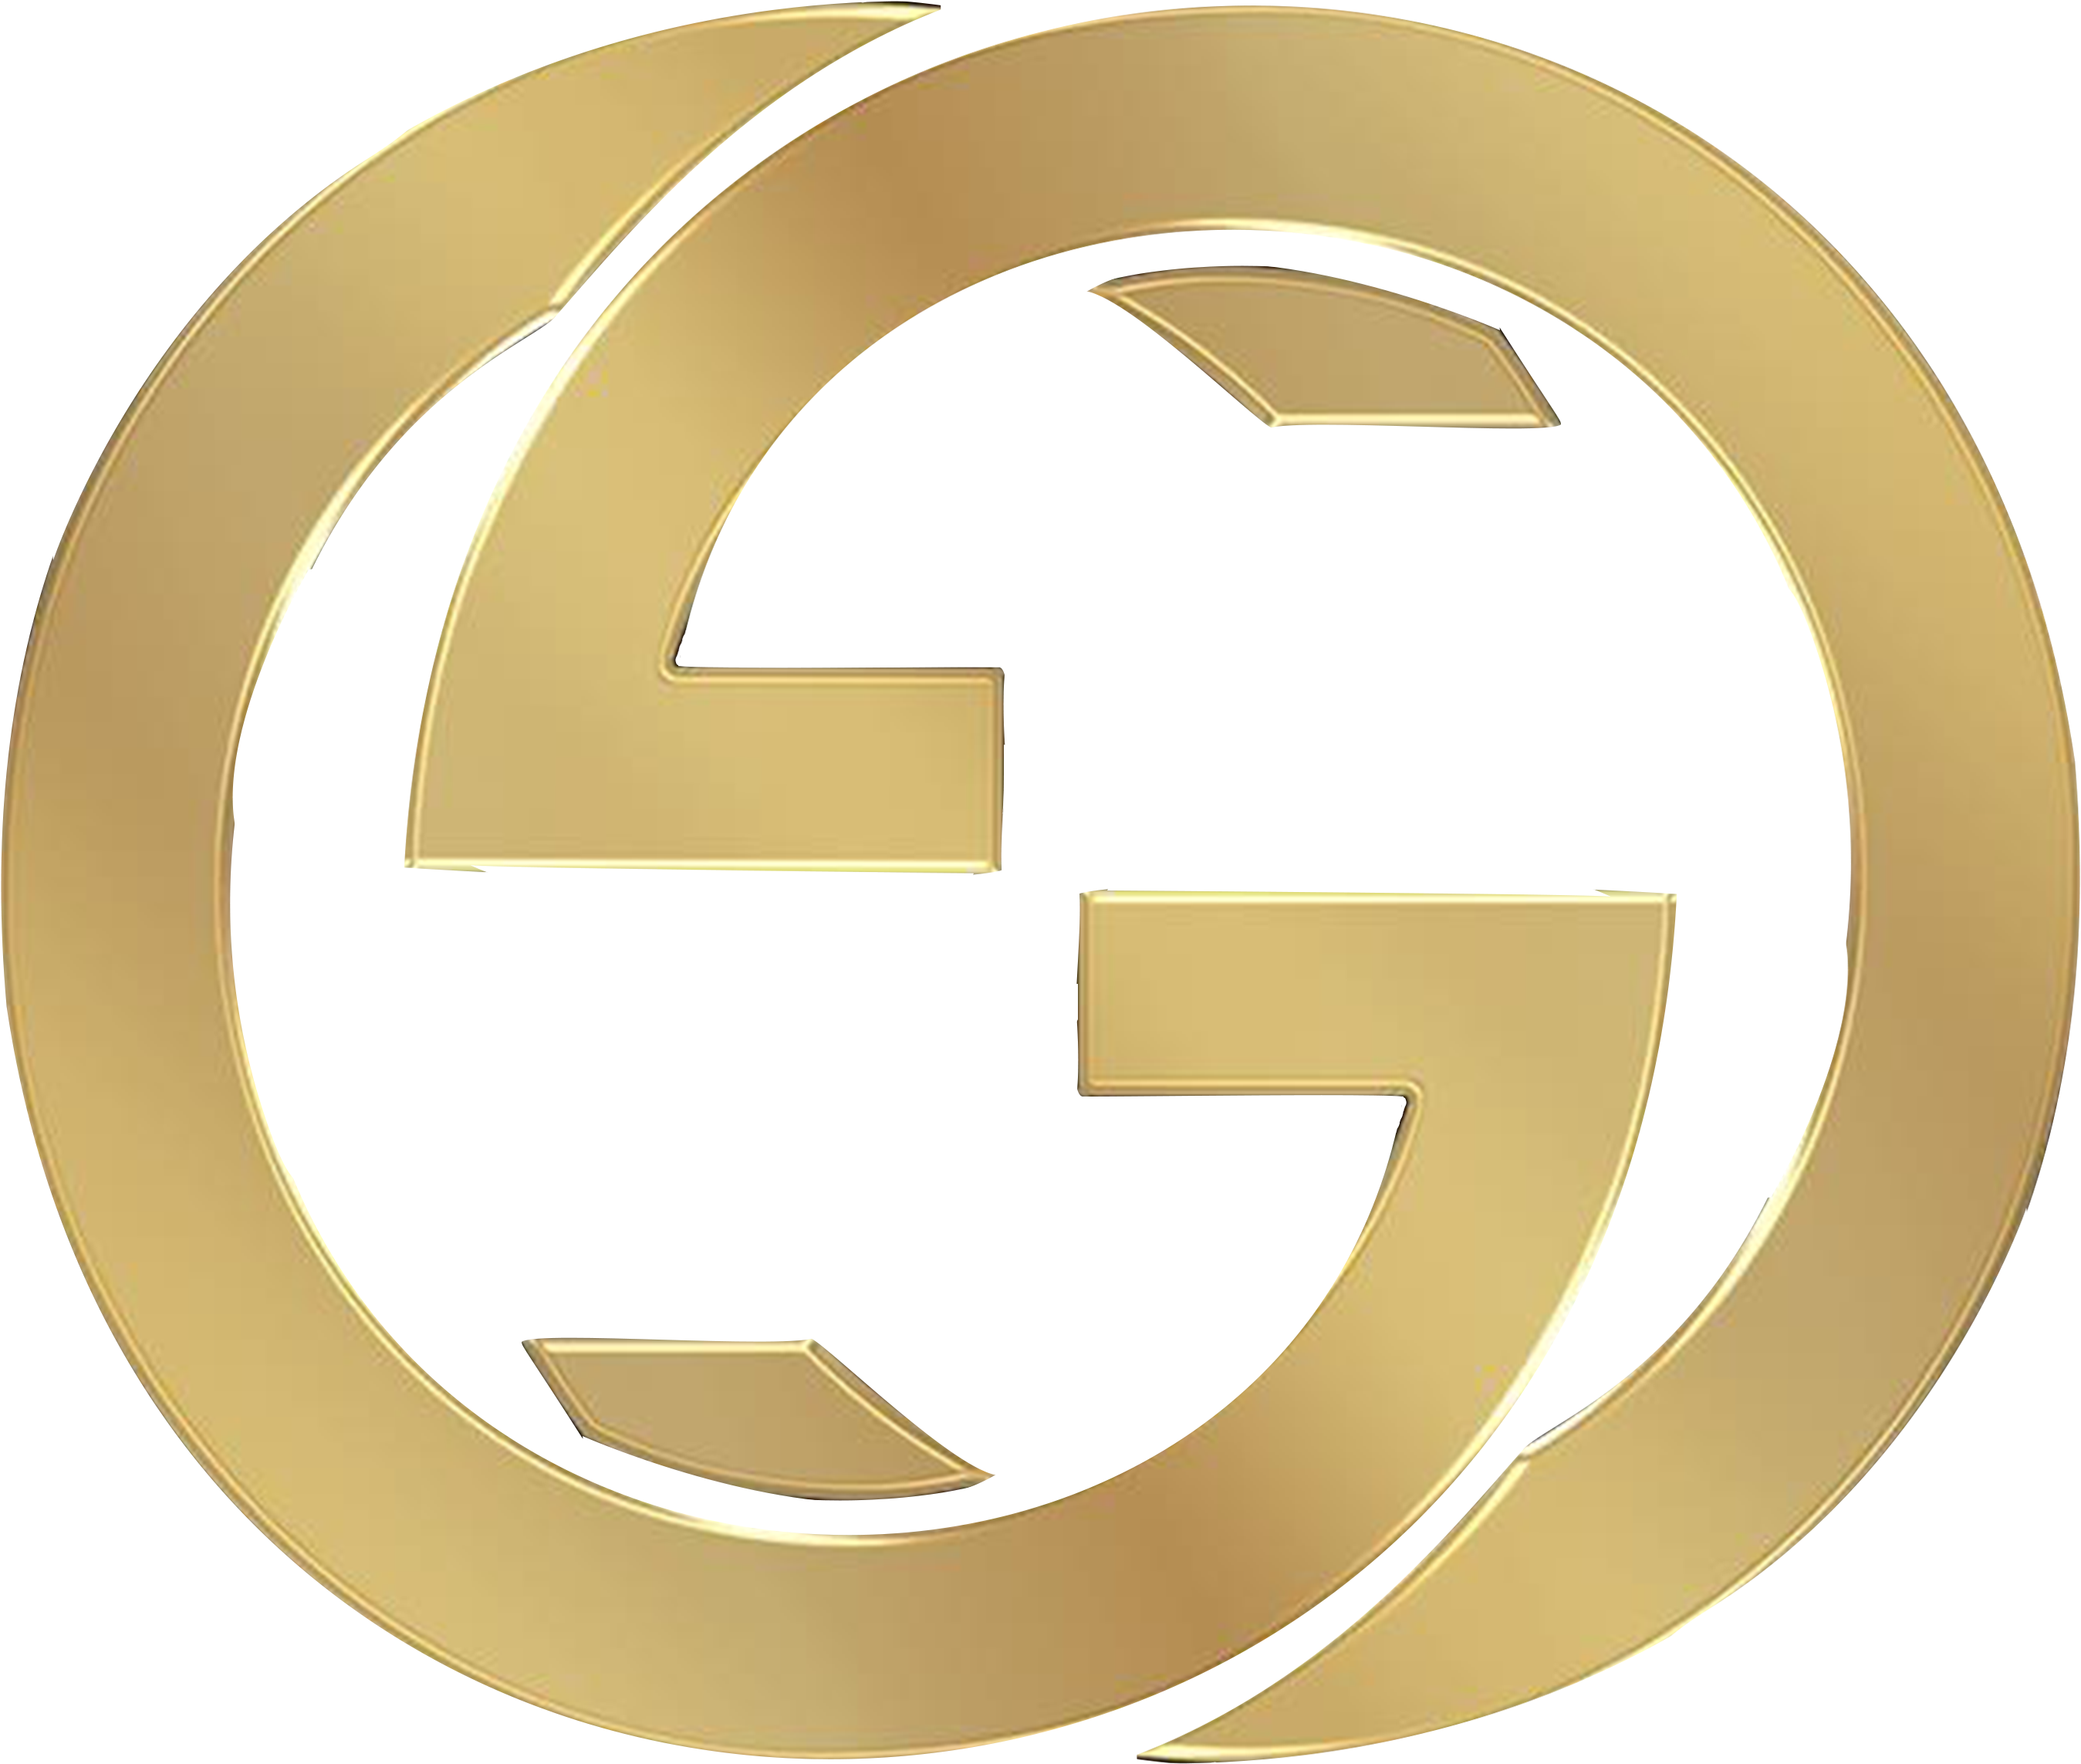 Gucci logo PNG